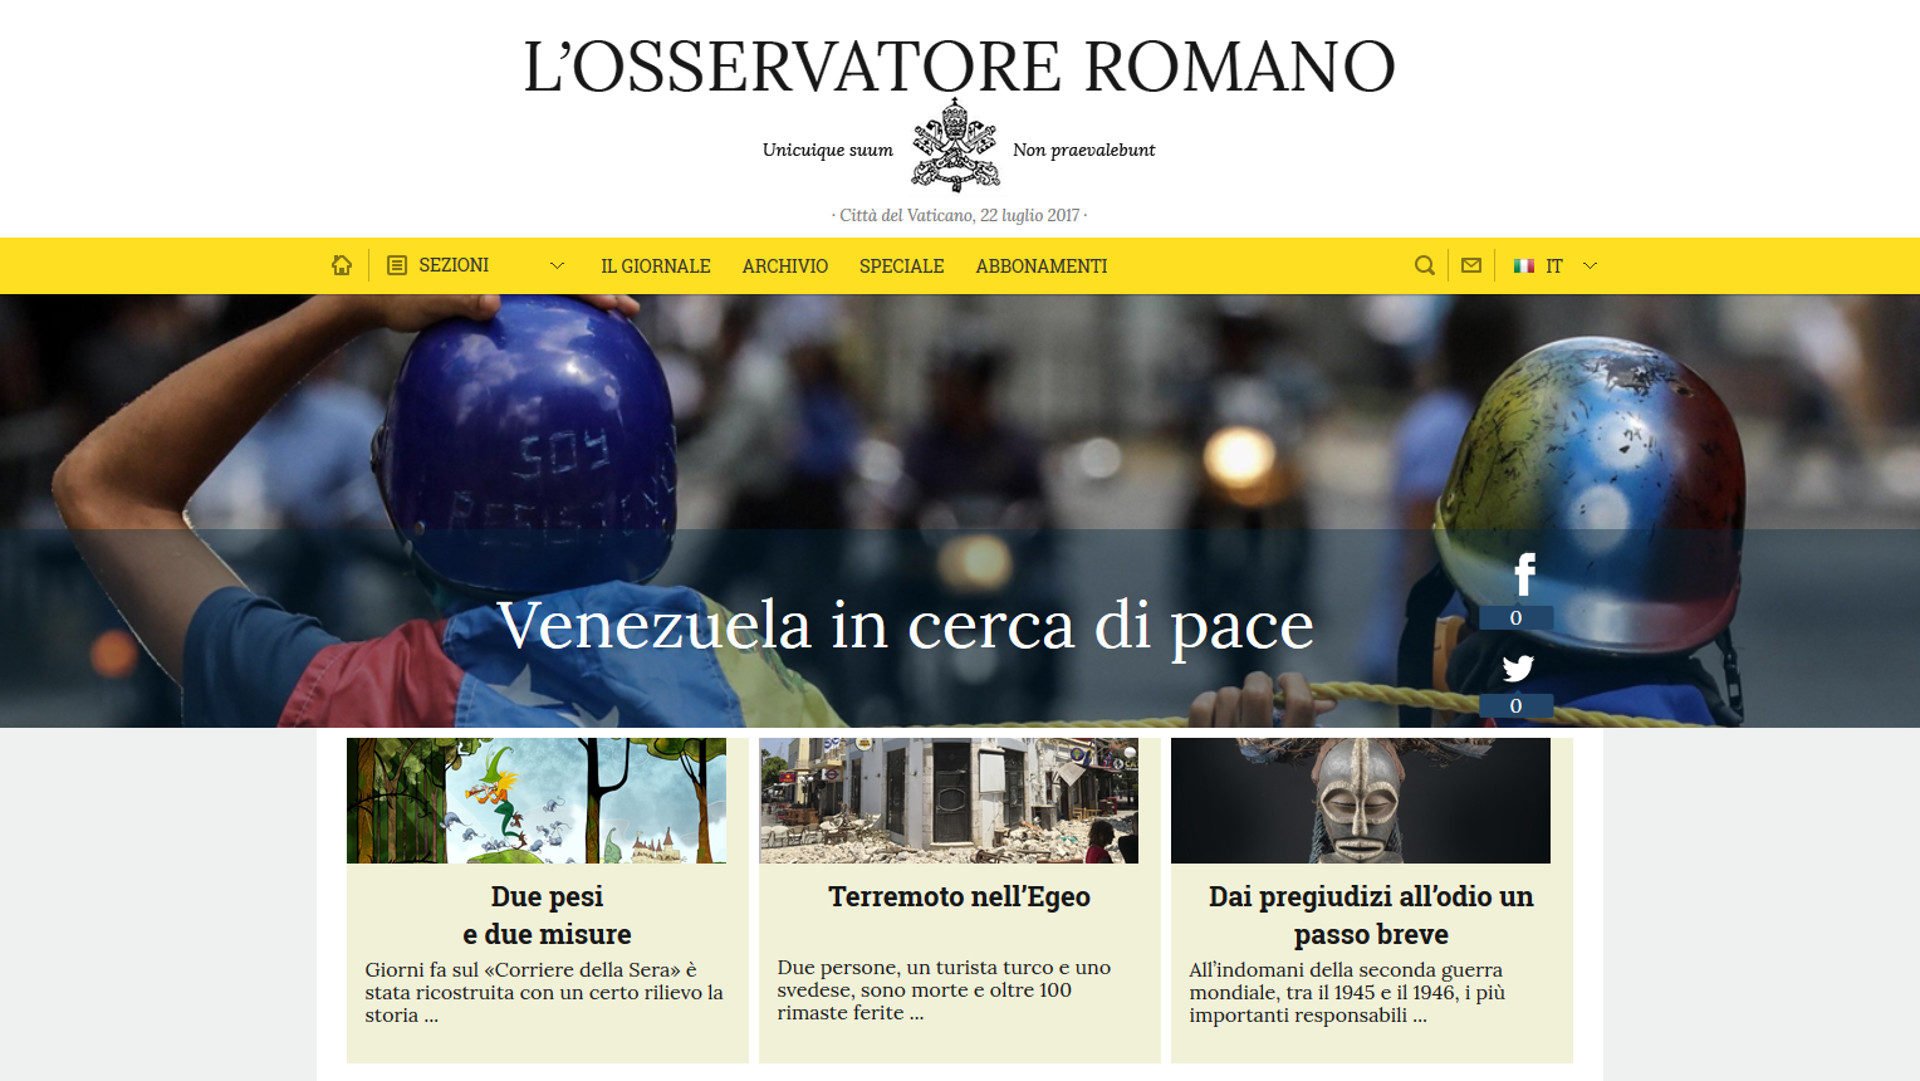 "Osservatore romano" online